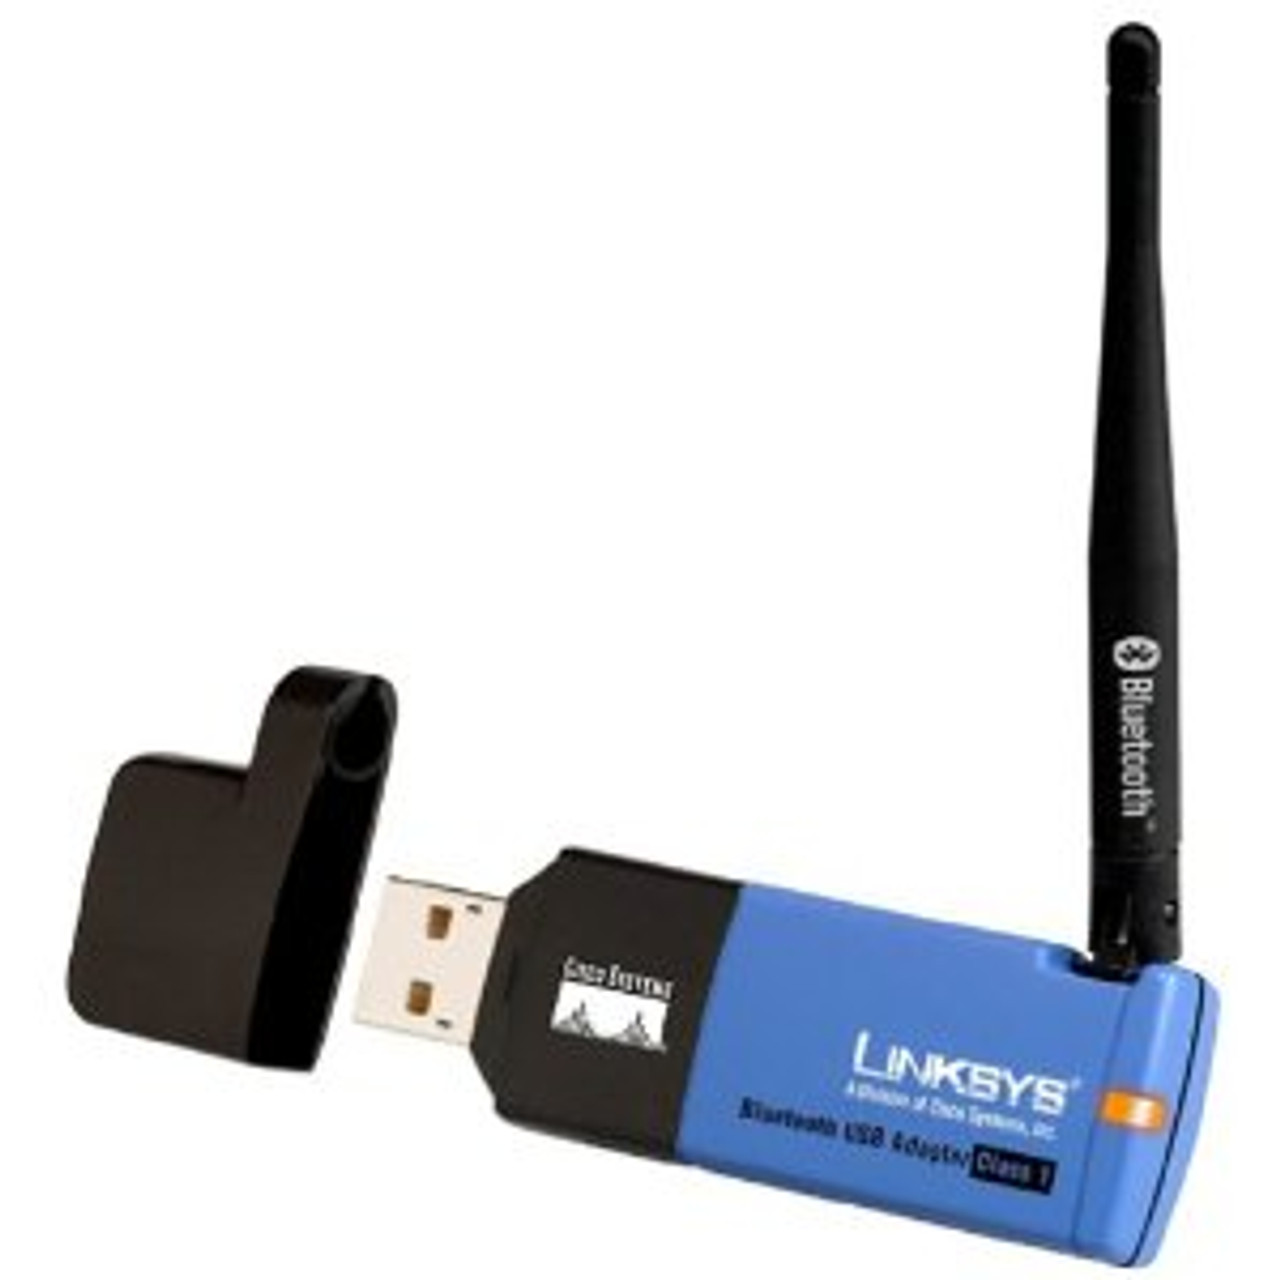 USBBT100 Linksys 721Kbps Wireless Bluetooth USB 1.1 Network Adapter